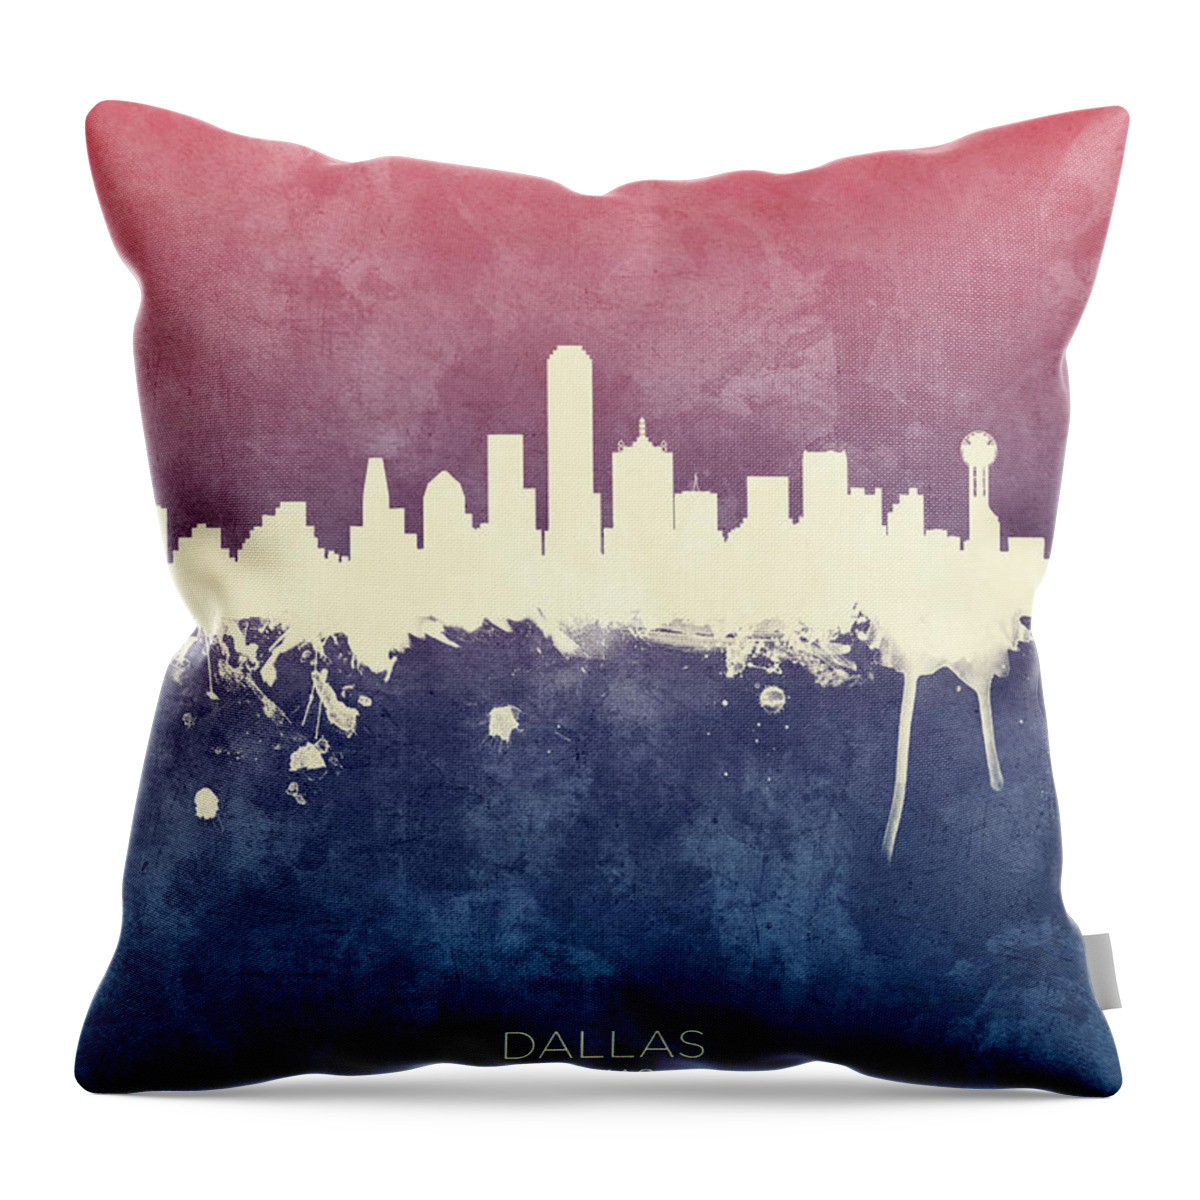 Dallas Throw Pillow featuring the digital art Dallas Texas Skyline #22 by Michael Tompsett